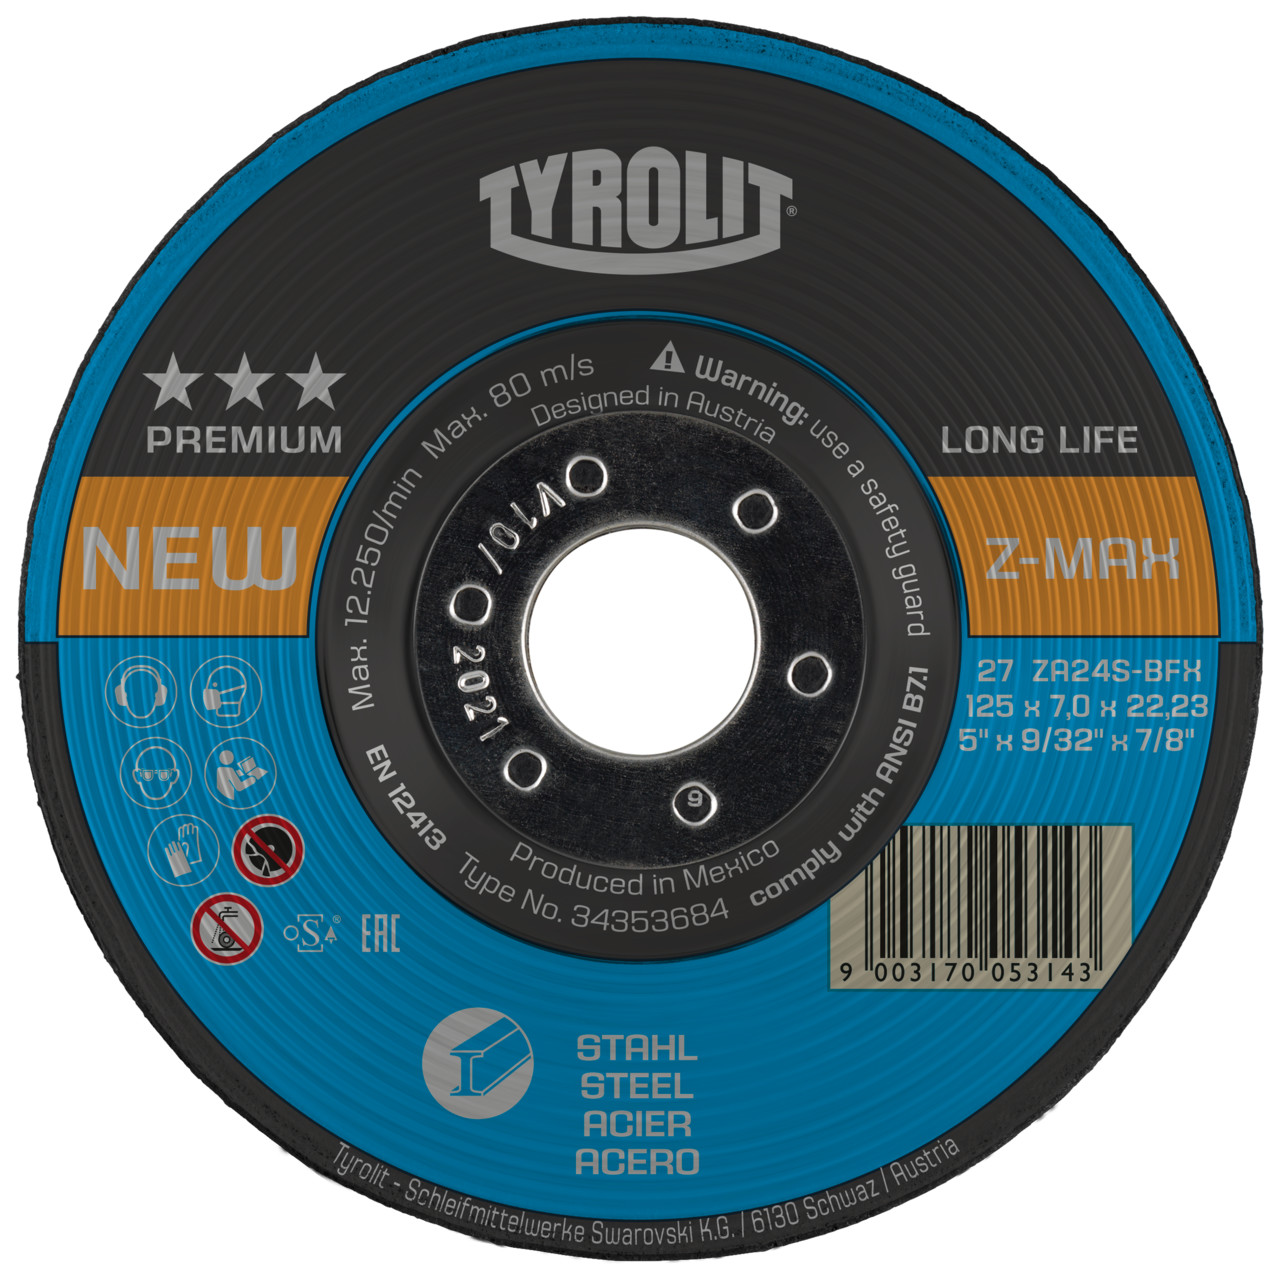 Tyrolit Rough grinding disc DxUxH 125x4x22.23 LONGLIFE Z-MAX for steel, shape: 27 - offset version, Art. 34353702